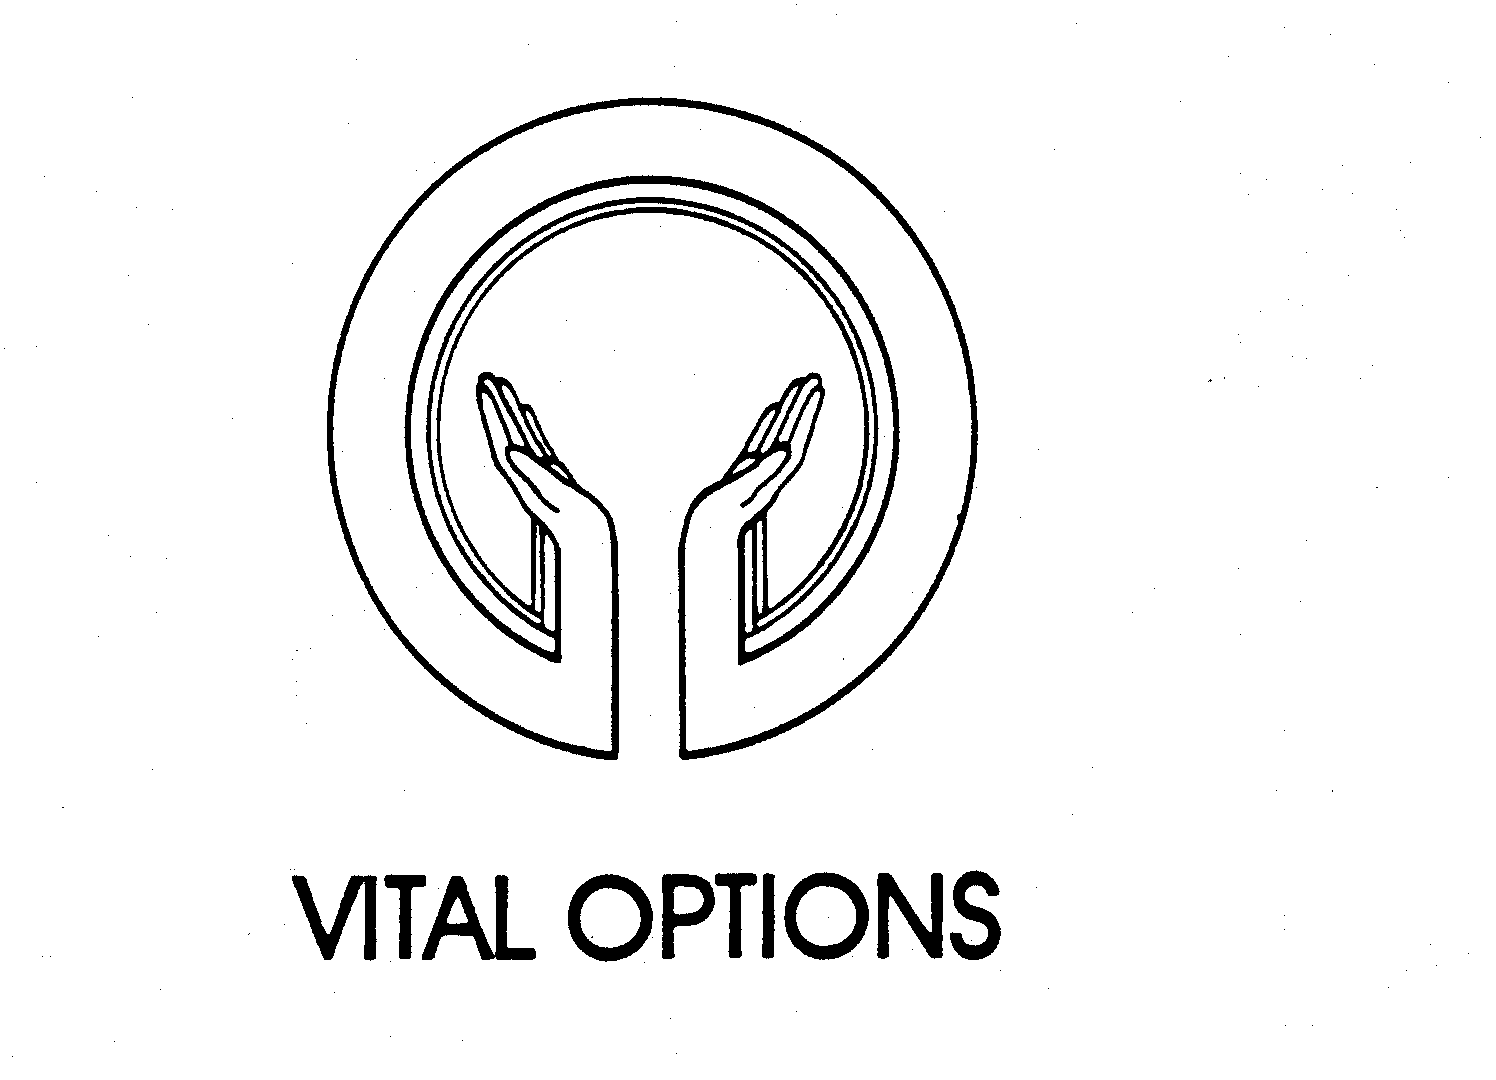  VITAL OPTIONS